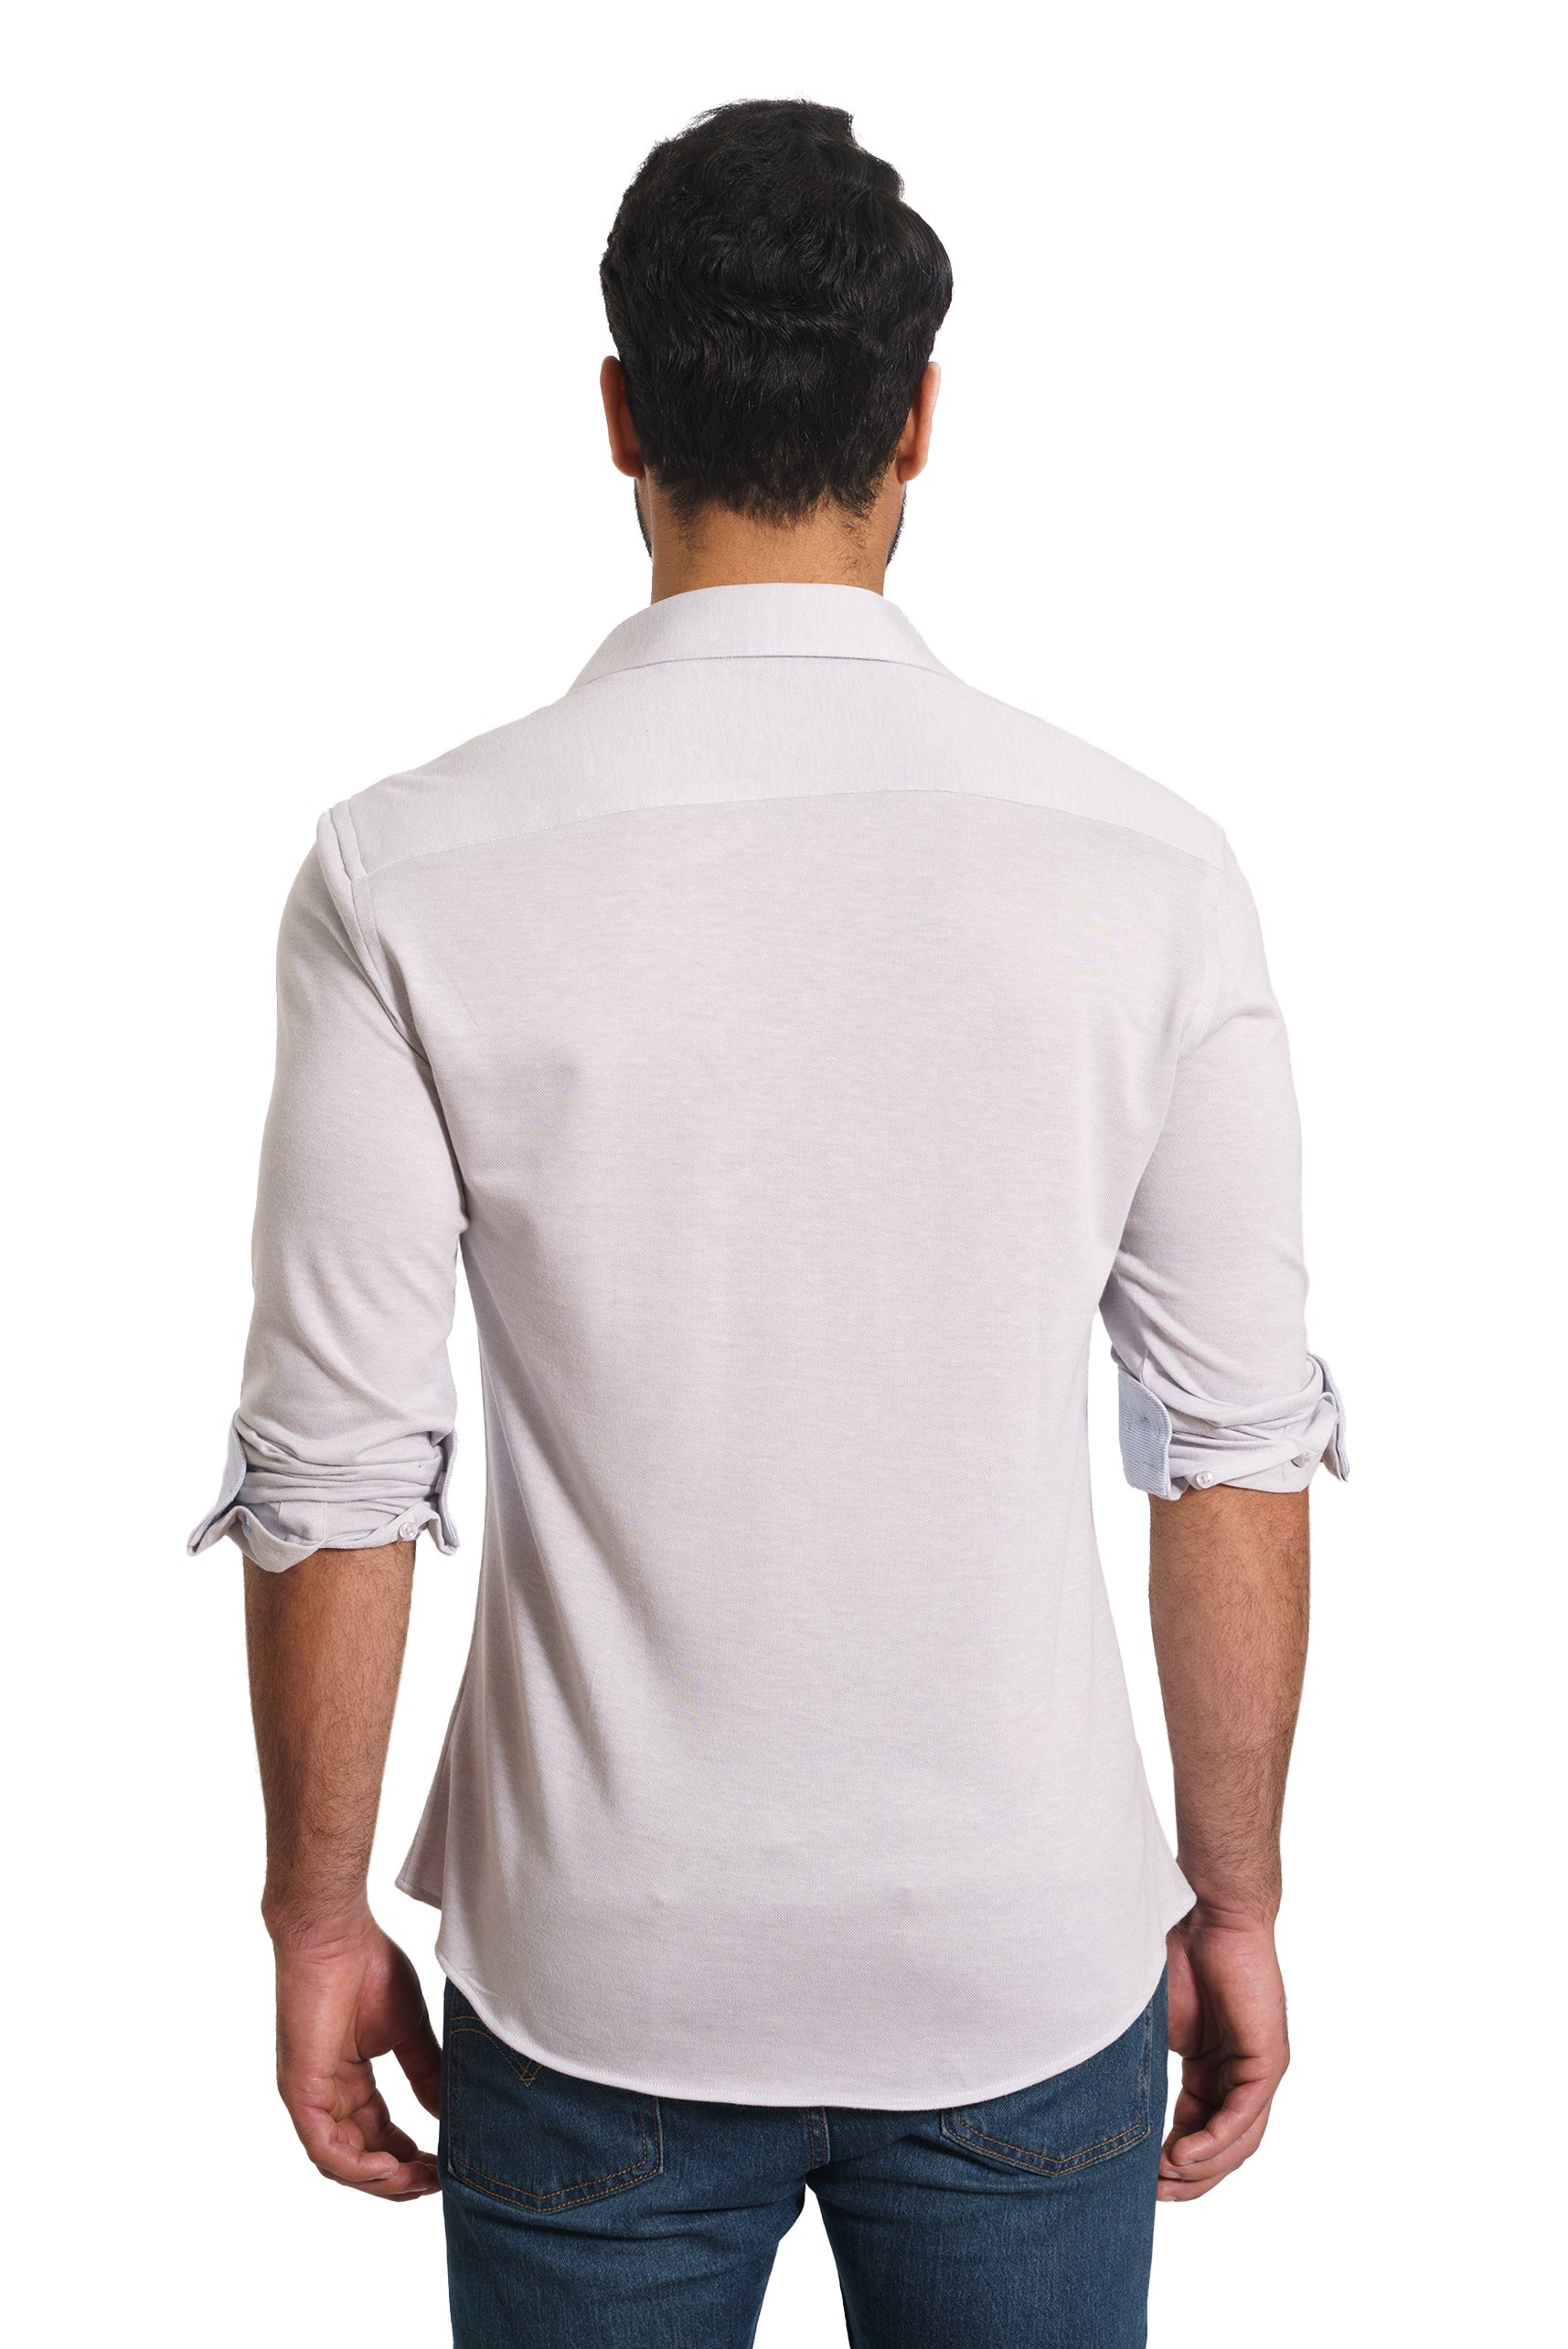 Grey Long Sleeve Shirt TH-2883 Back